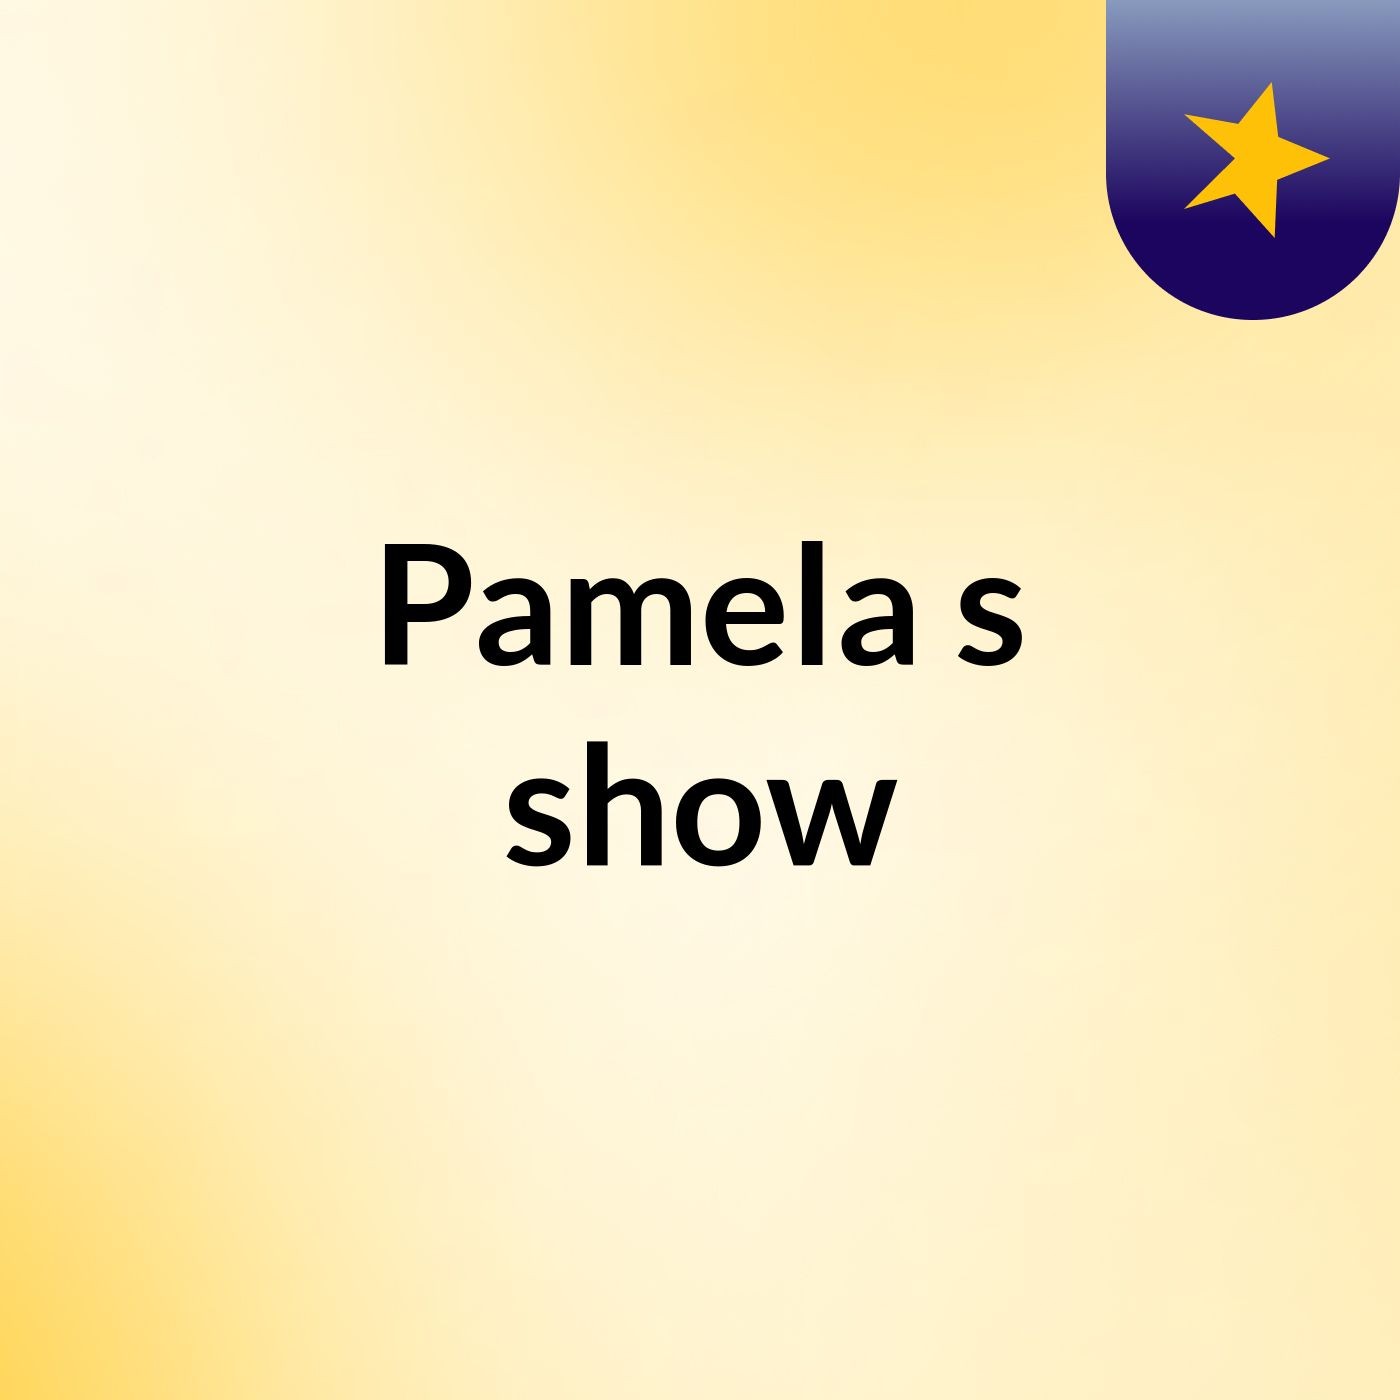 Pamela's show